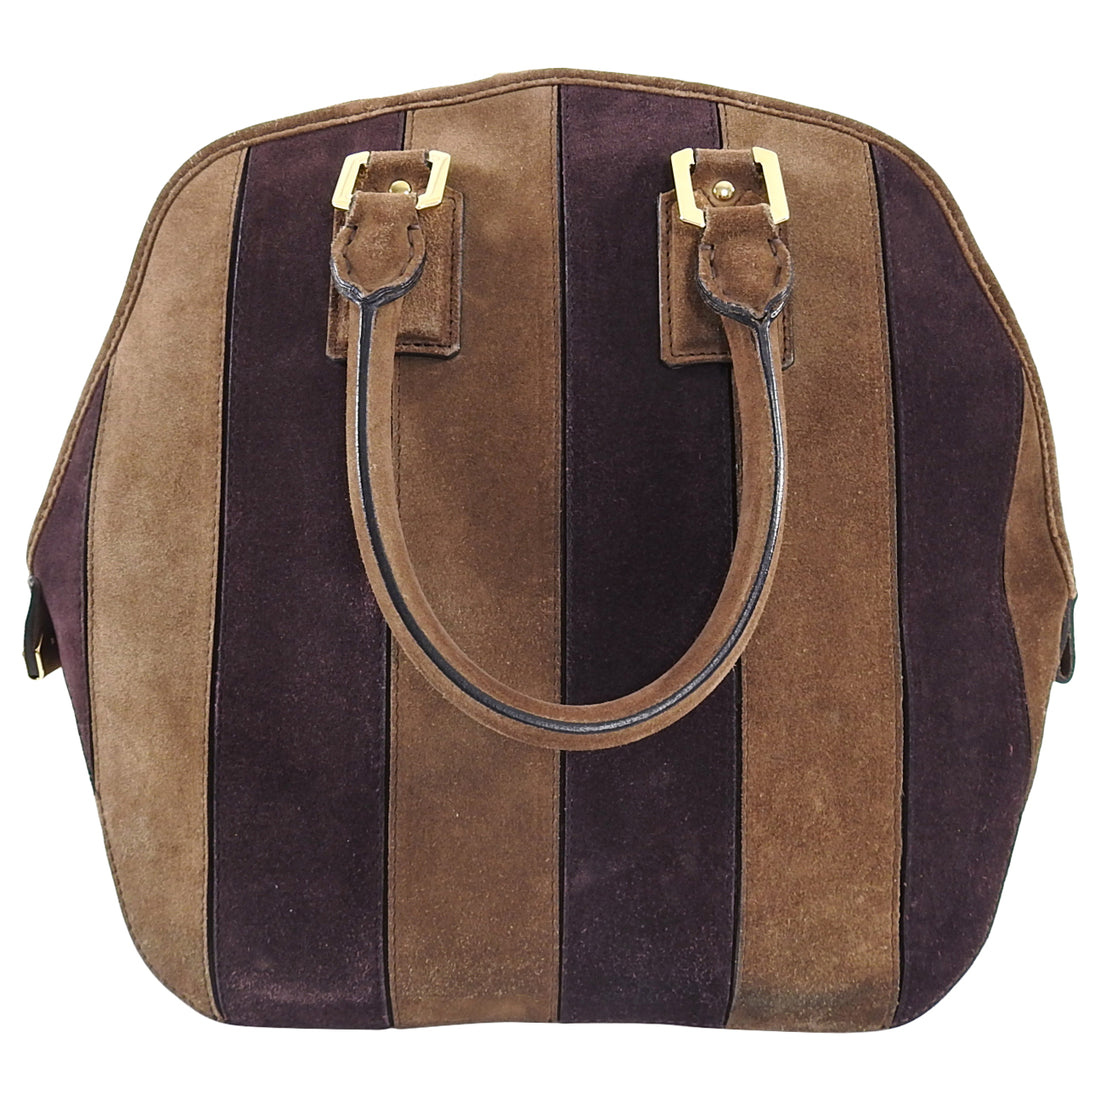 Burberry Prorsum Suede Stripe Runway Bag Brown Purple